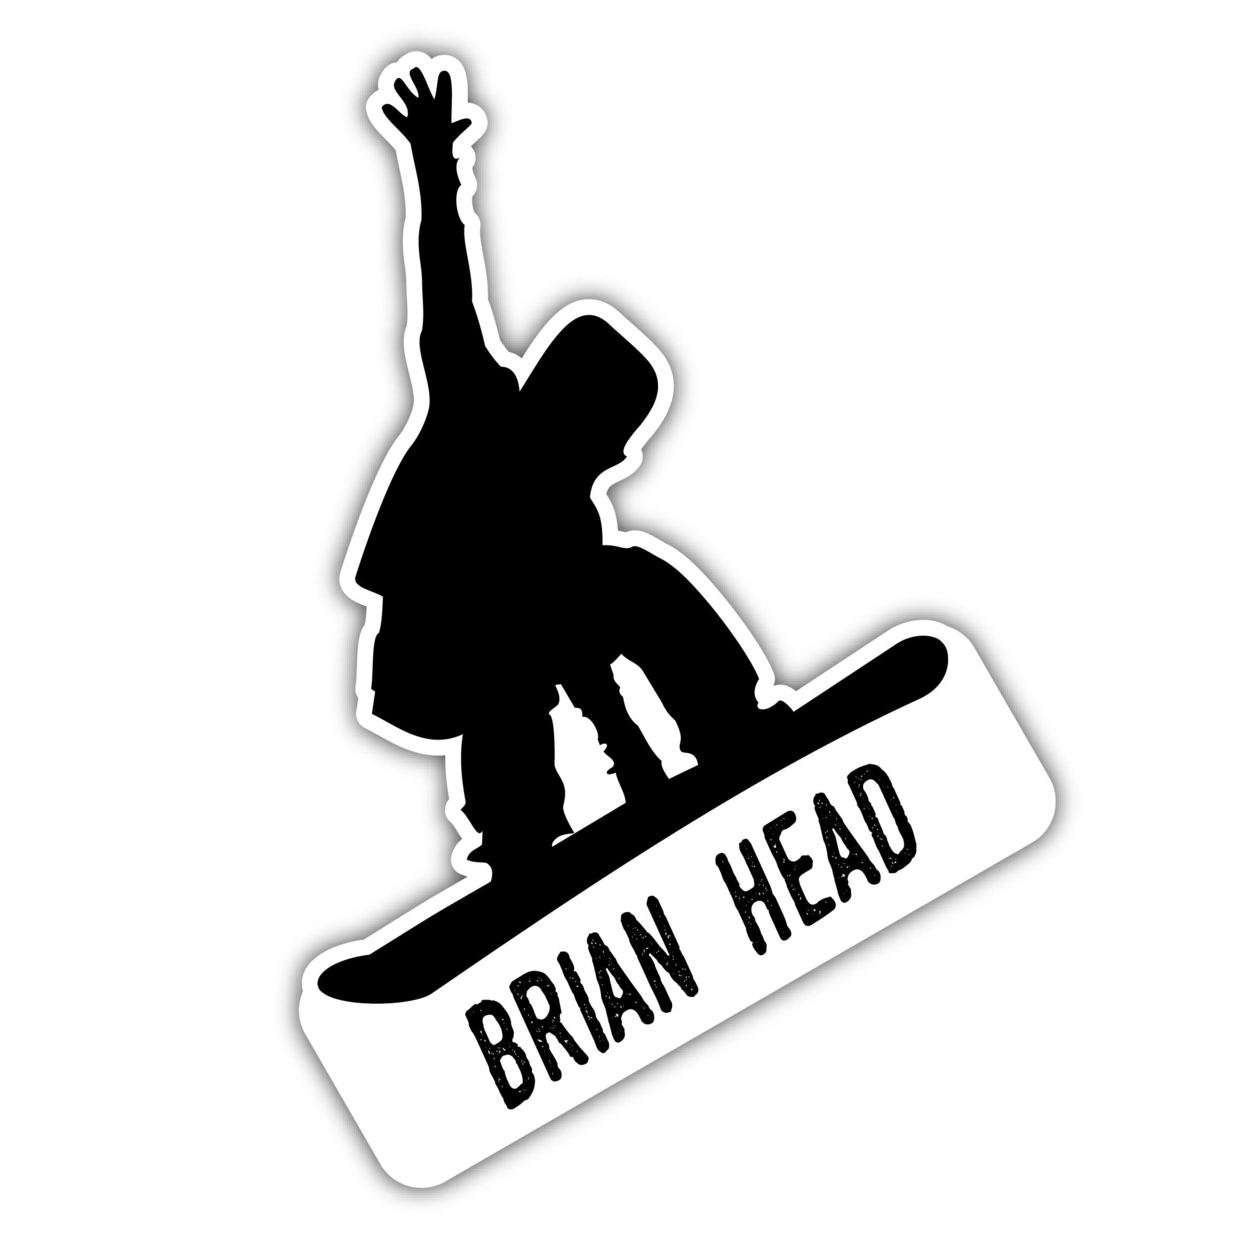 Brian Head Utah Ski Adventures Souvenir 4 Inch Vinyl Decal Sticker Board Design